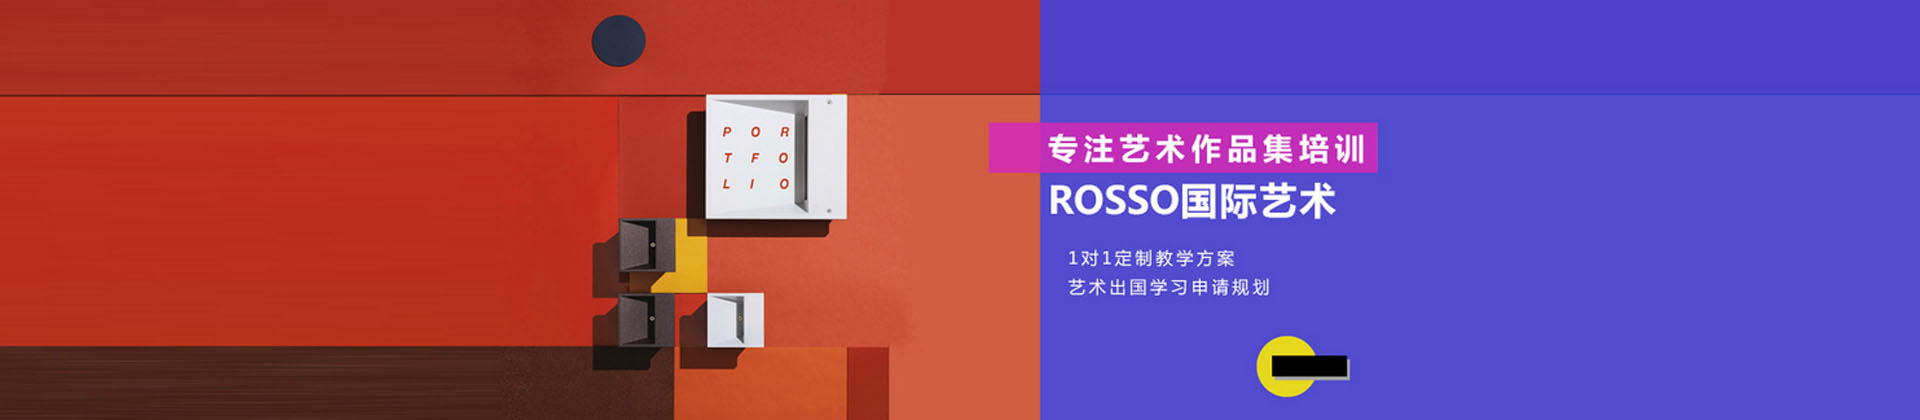 青岛ROSSO国际艺术教育